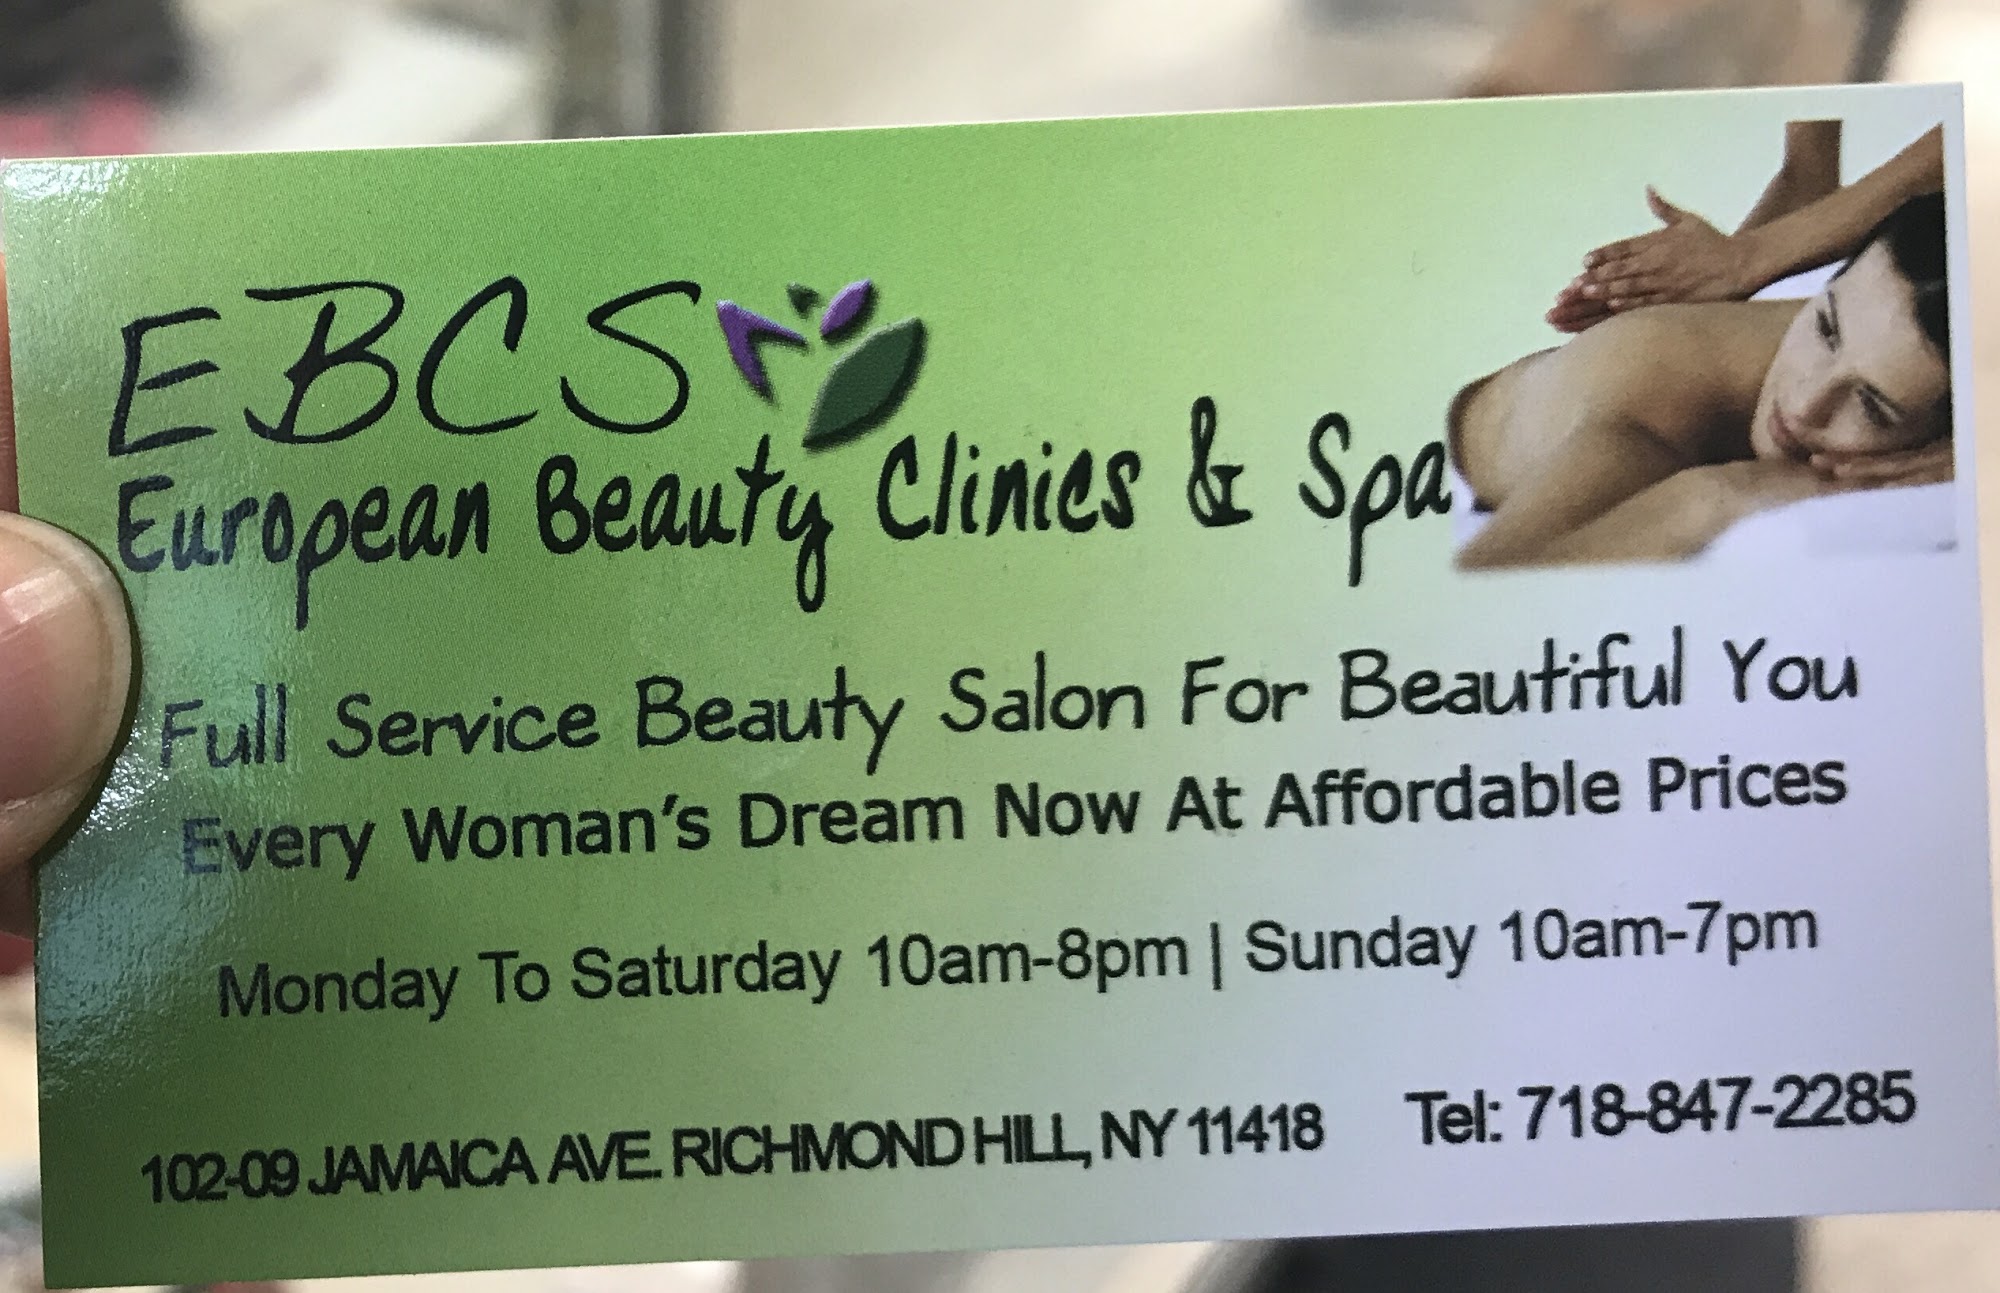 European Beauty Clinics & Spa